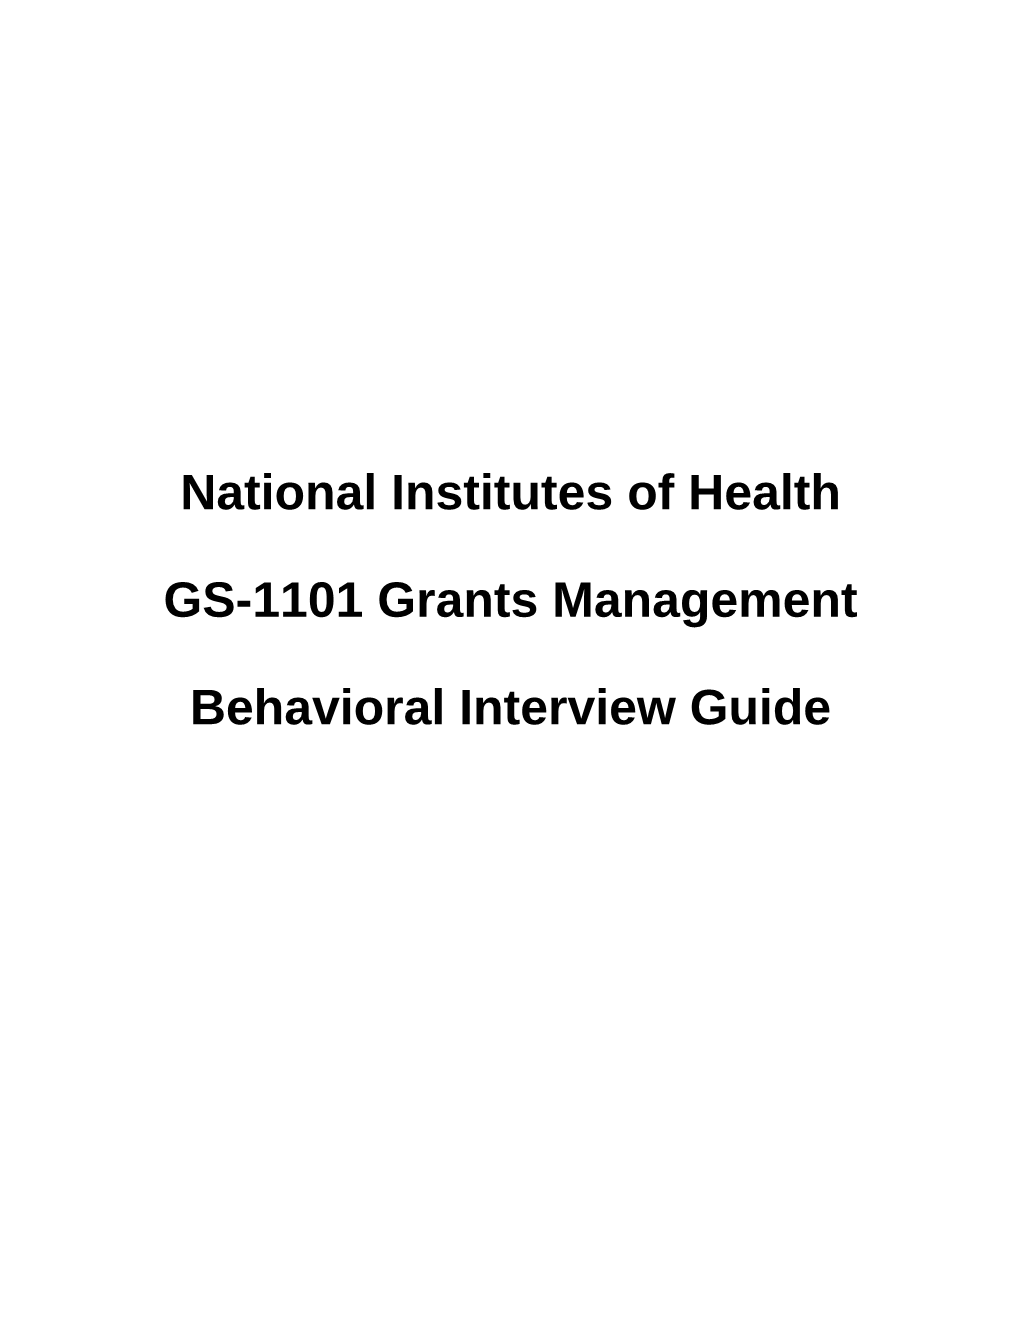 NIH Behavioral Interview Guide GS-1101 Grants Management